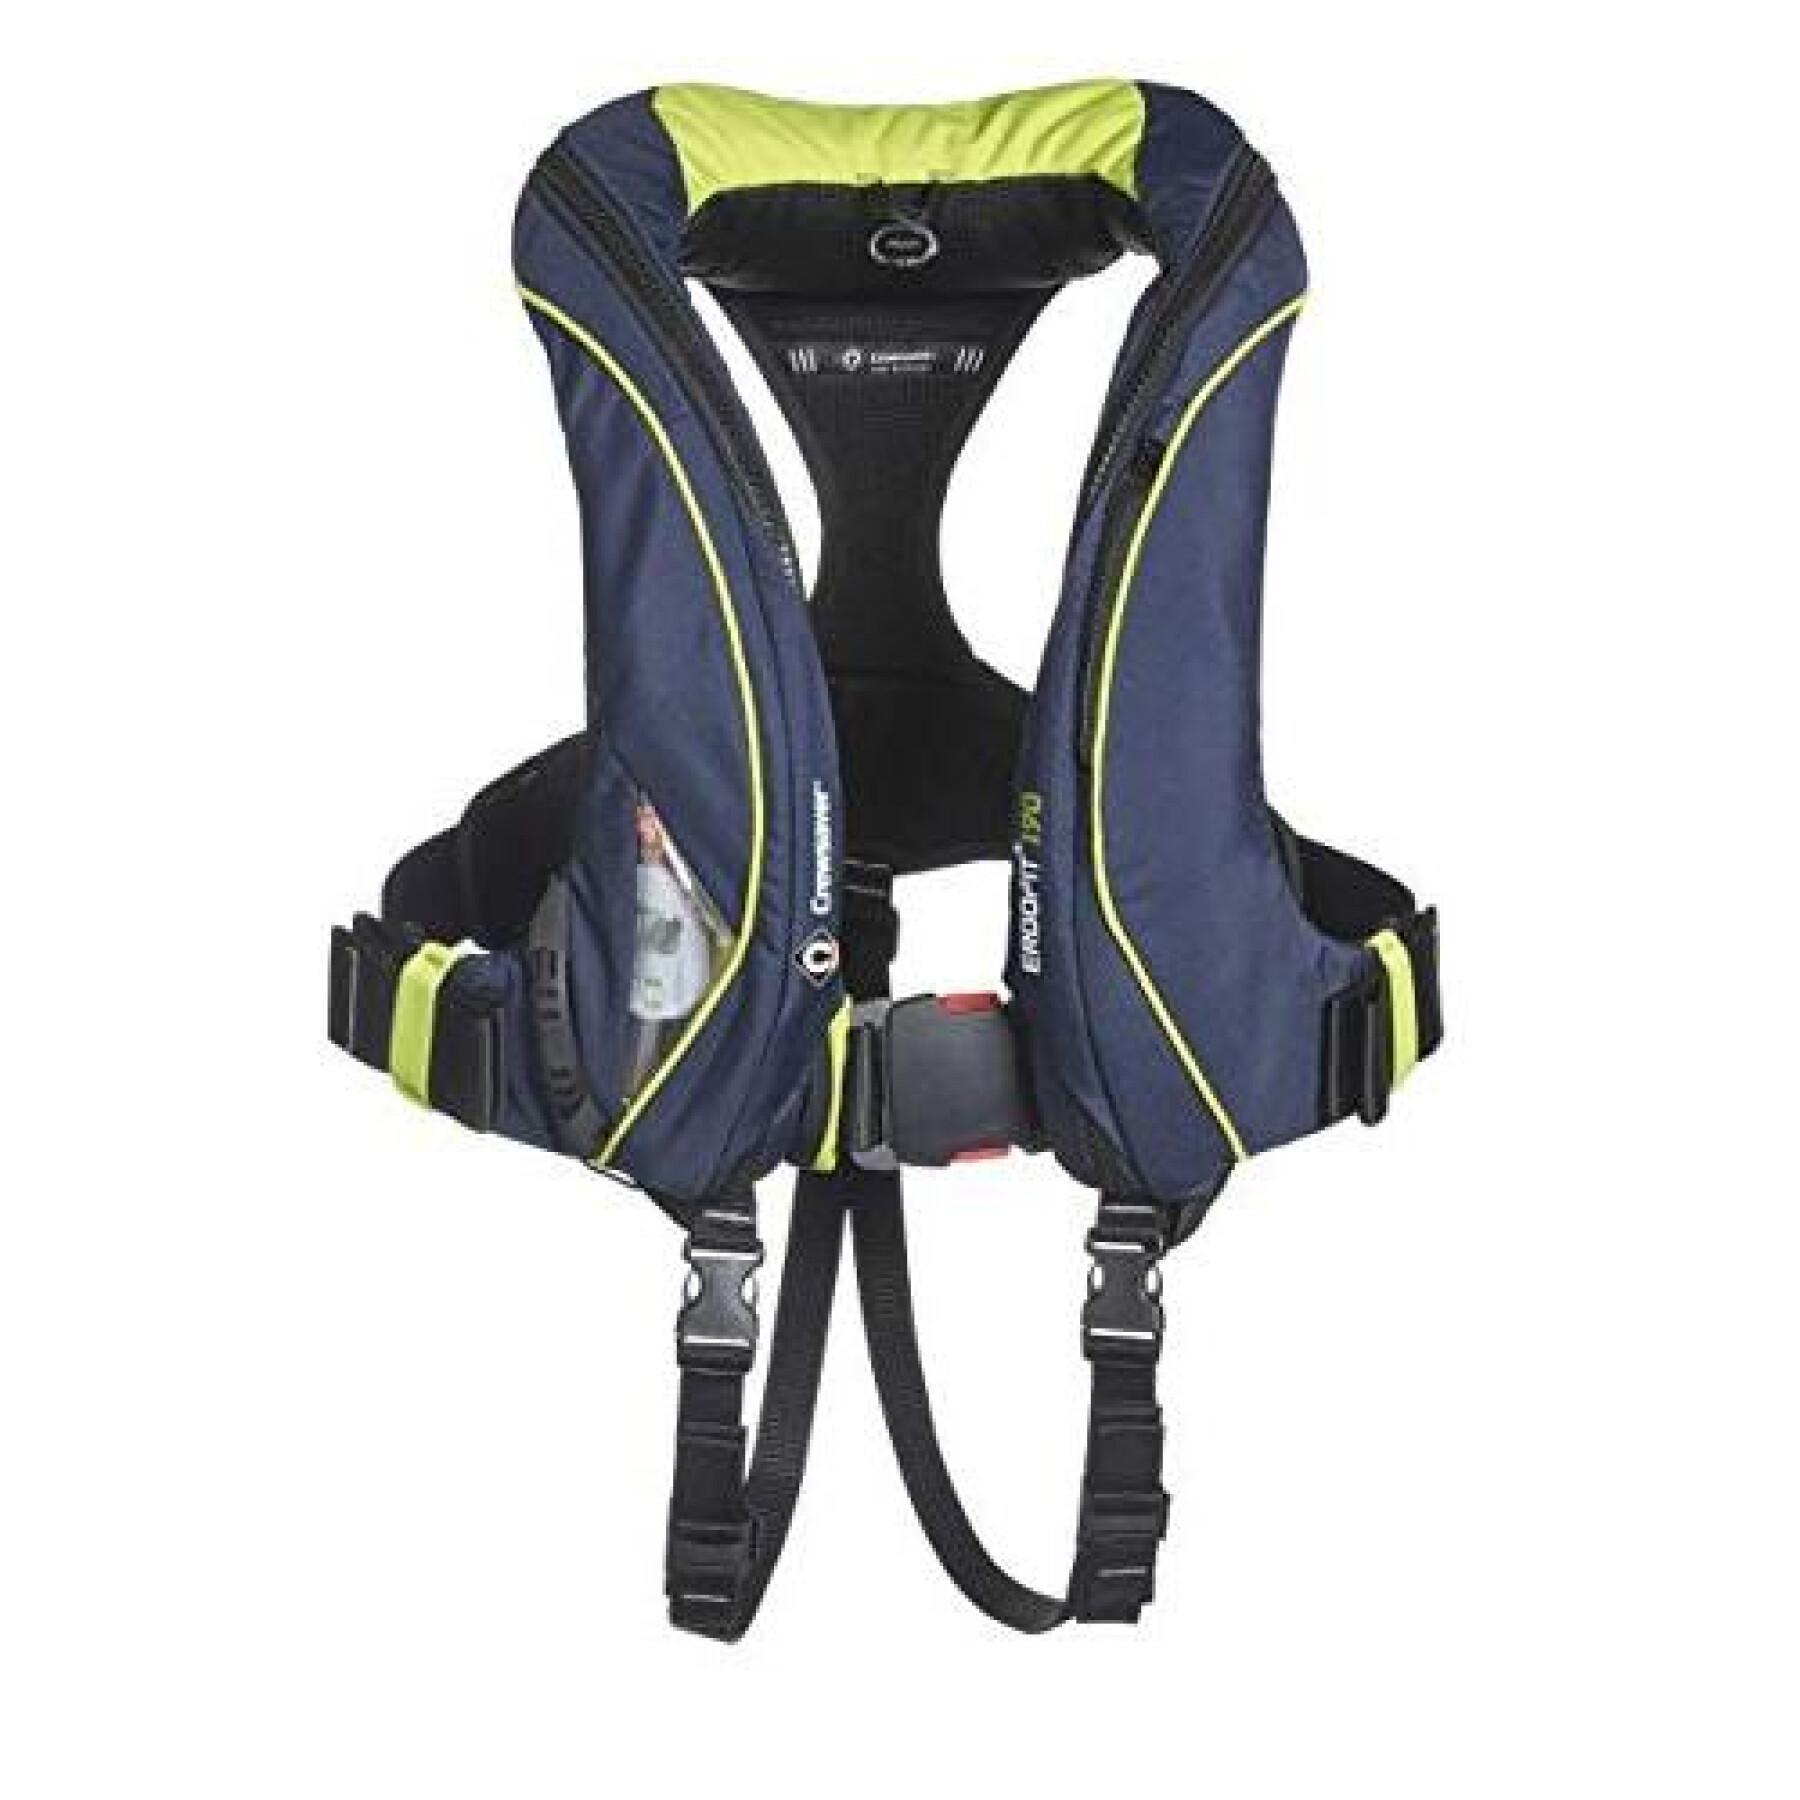 Automatic life jacket with harness, flashlight and hood Crewsaver ERGOFIT+ 190N